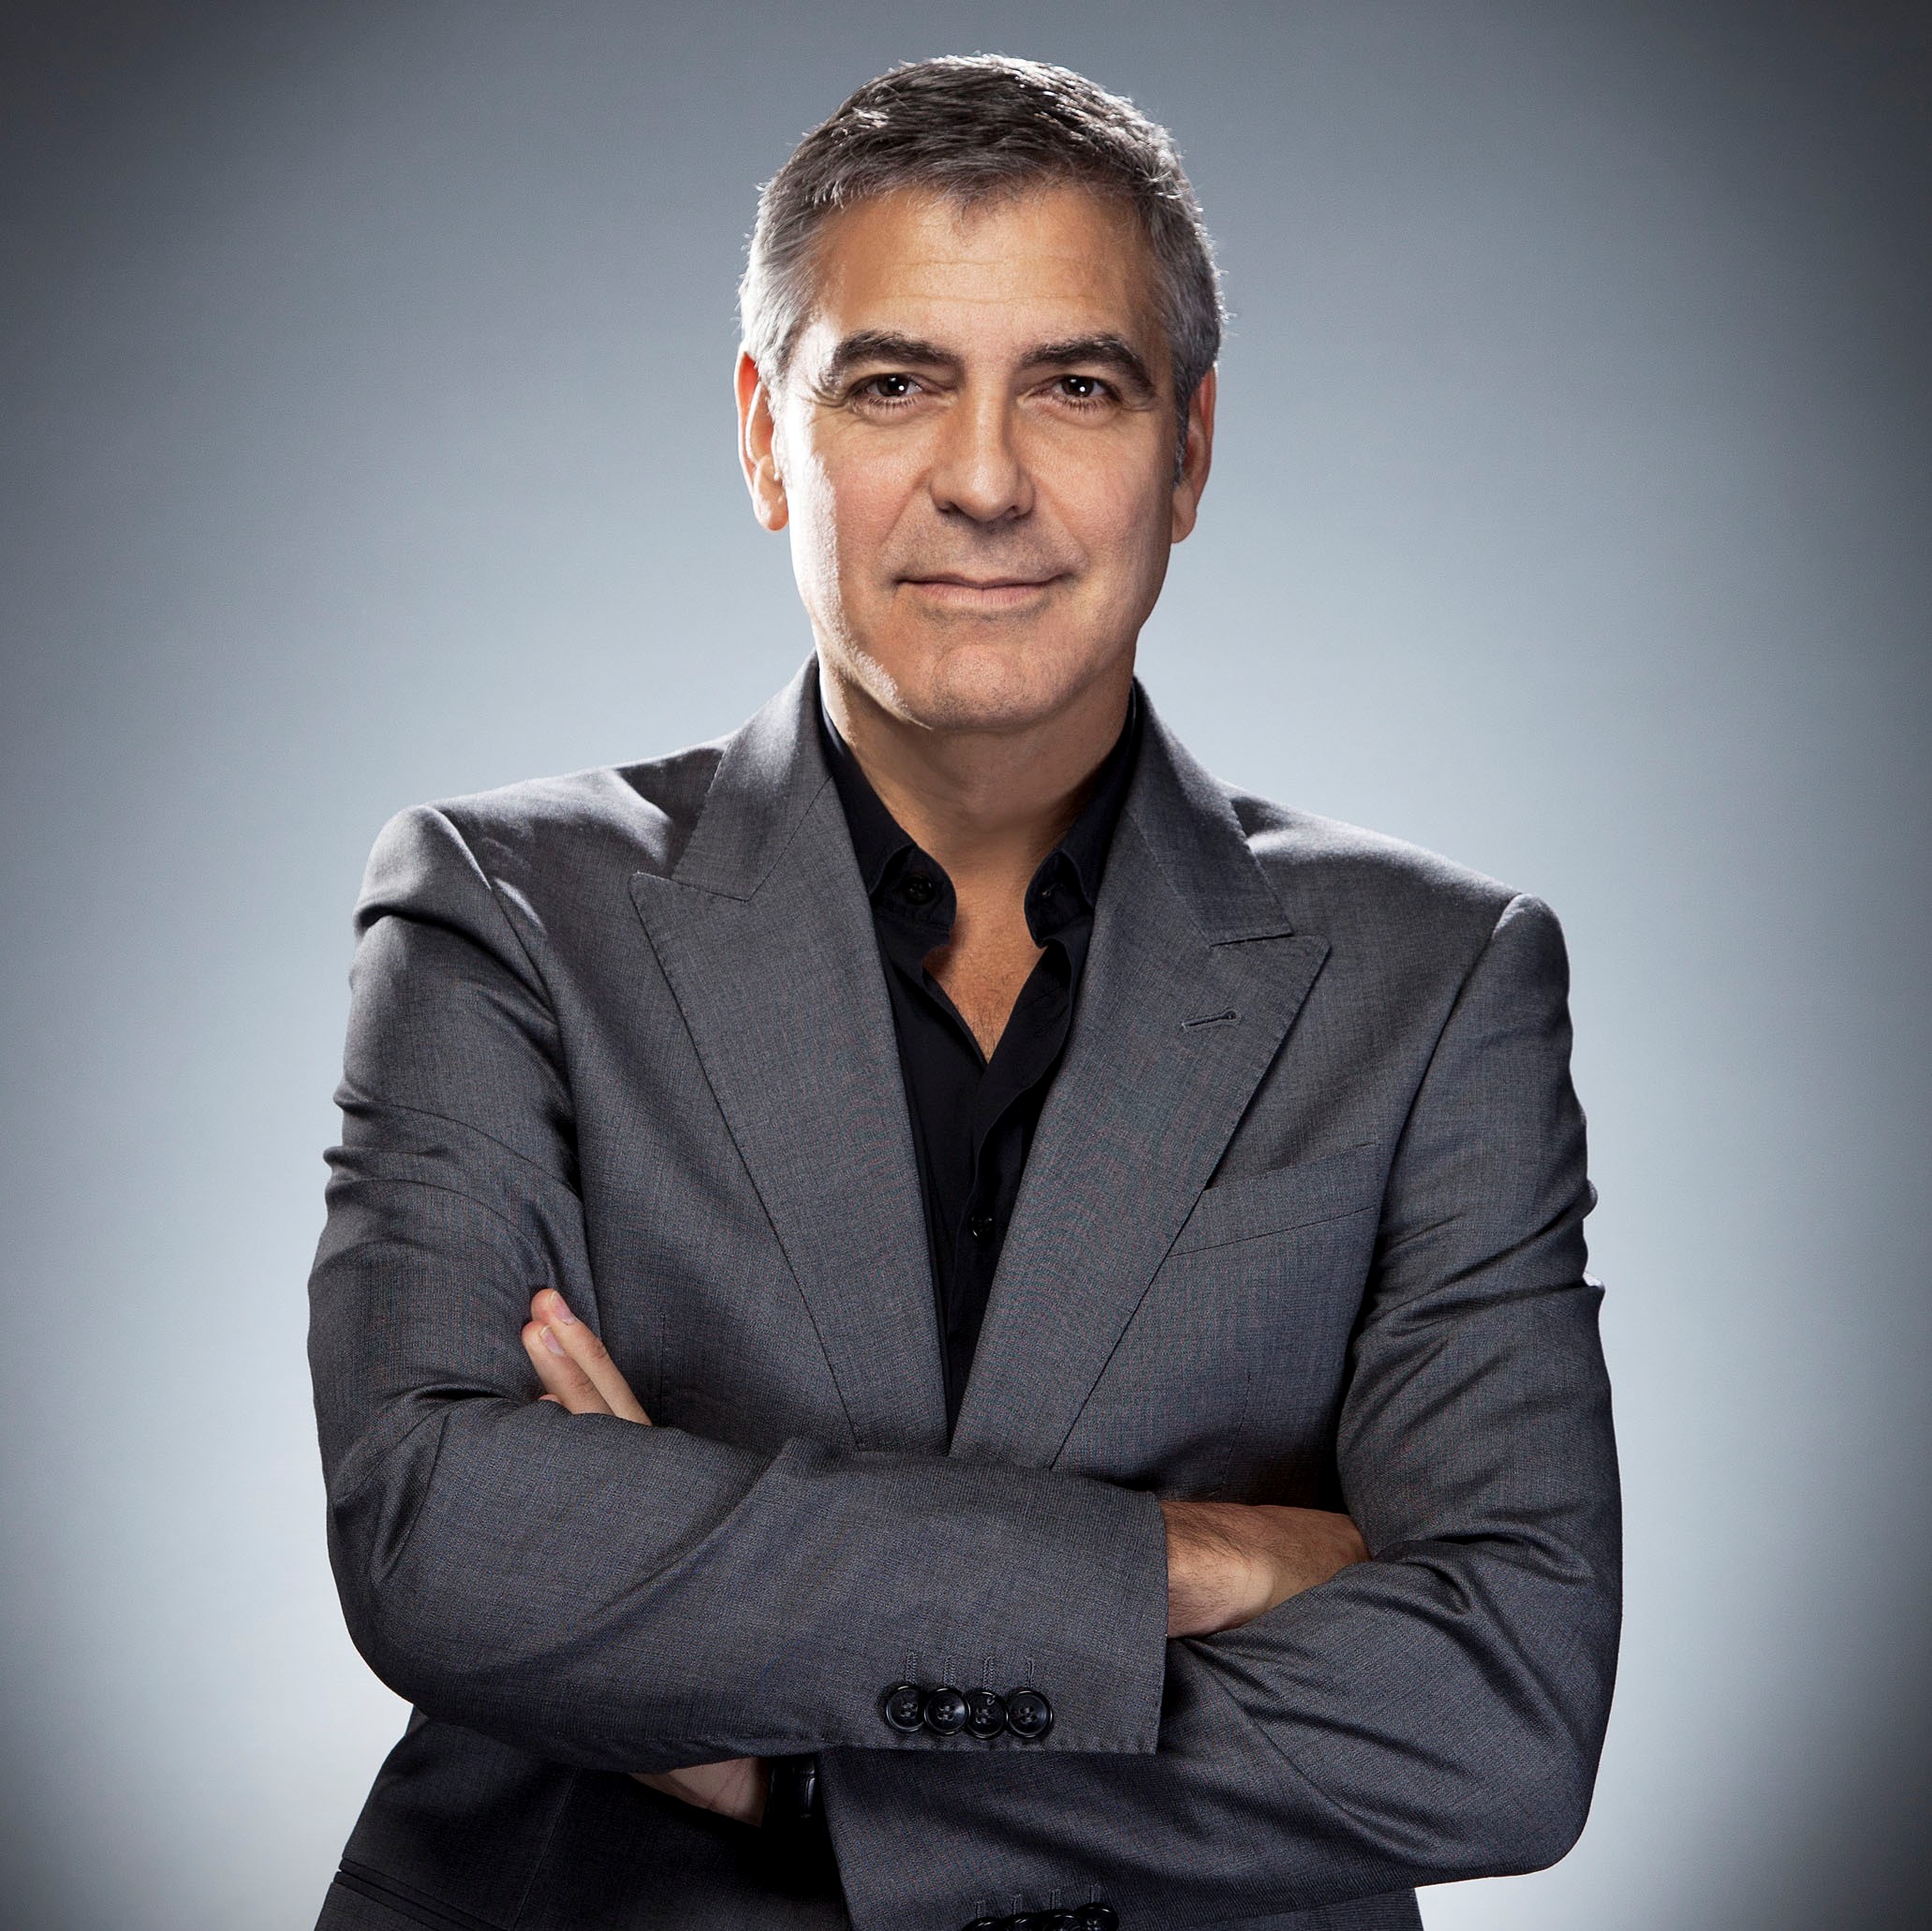 Джордж Клуни биография и новости